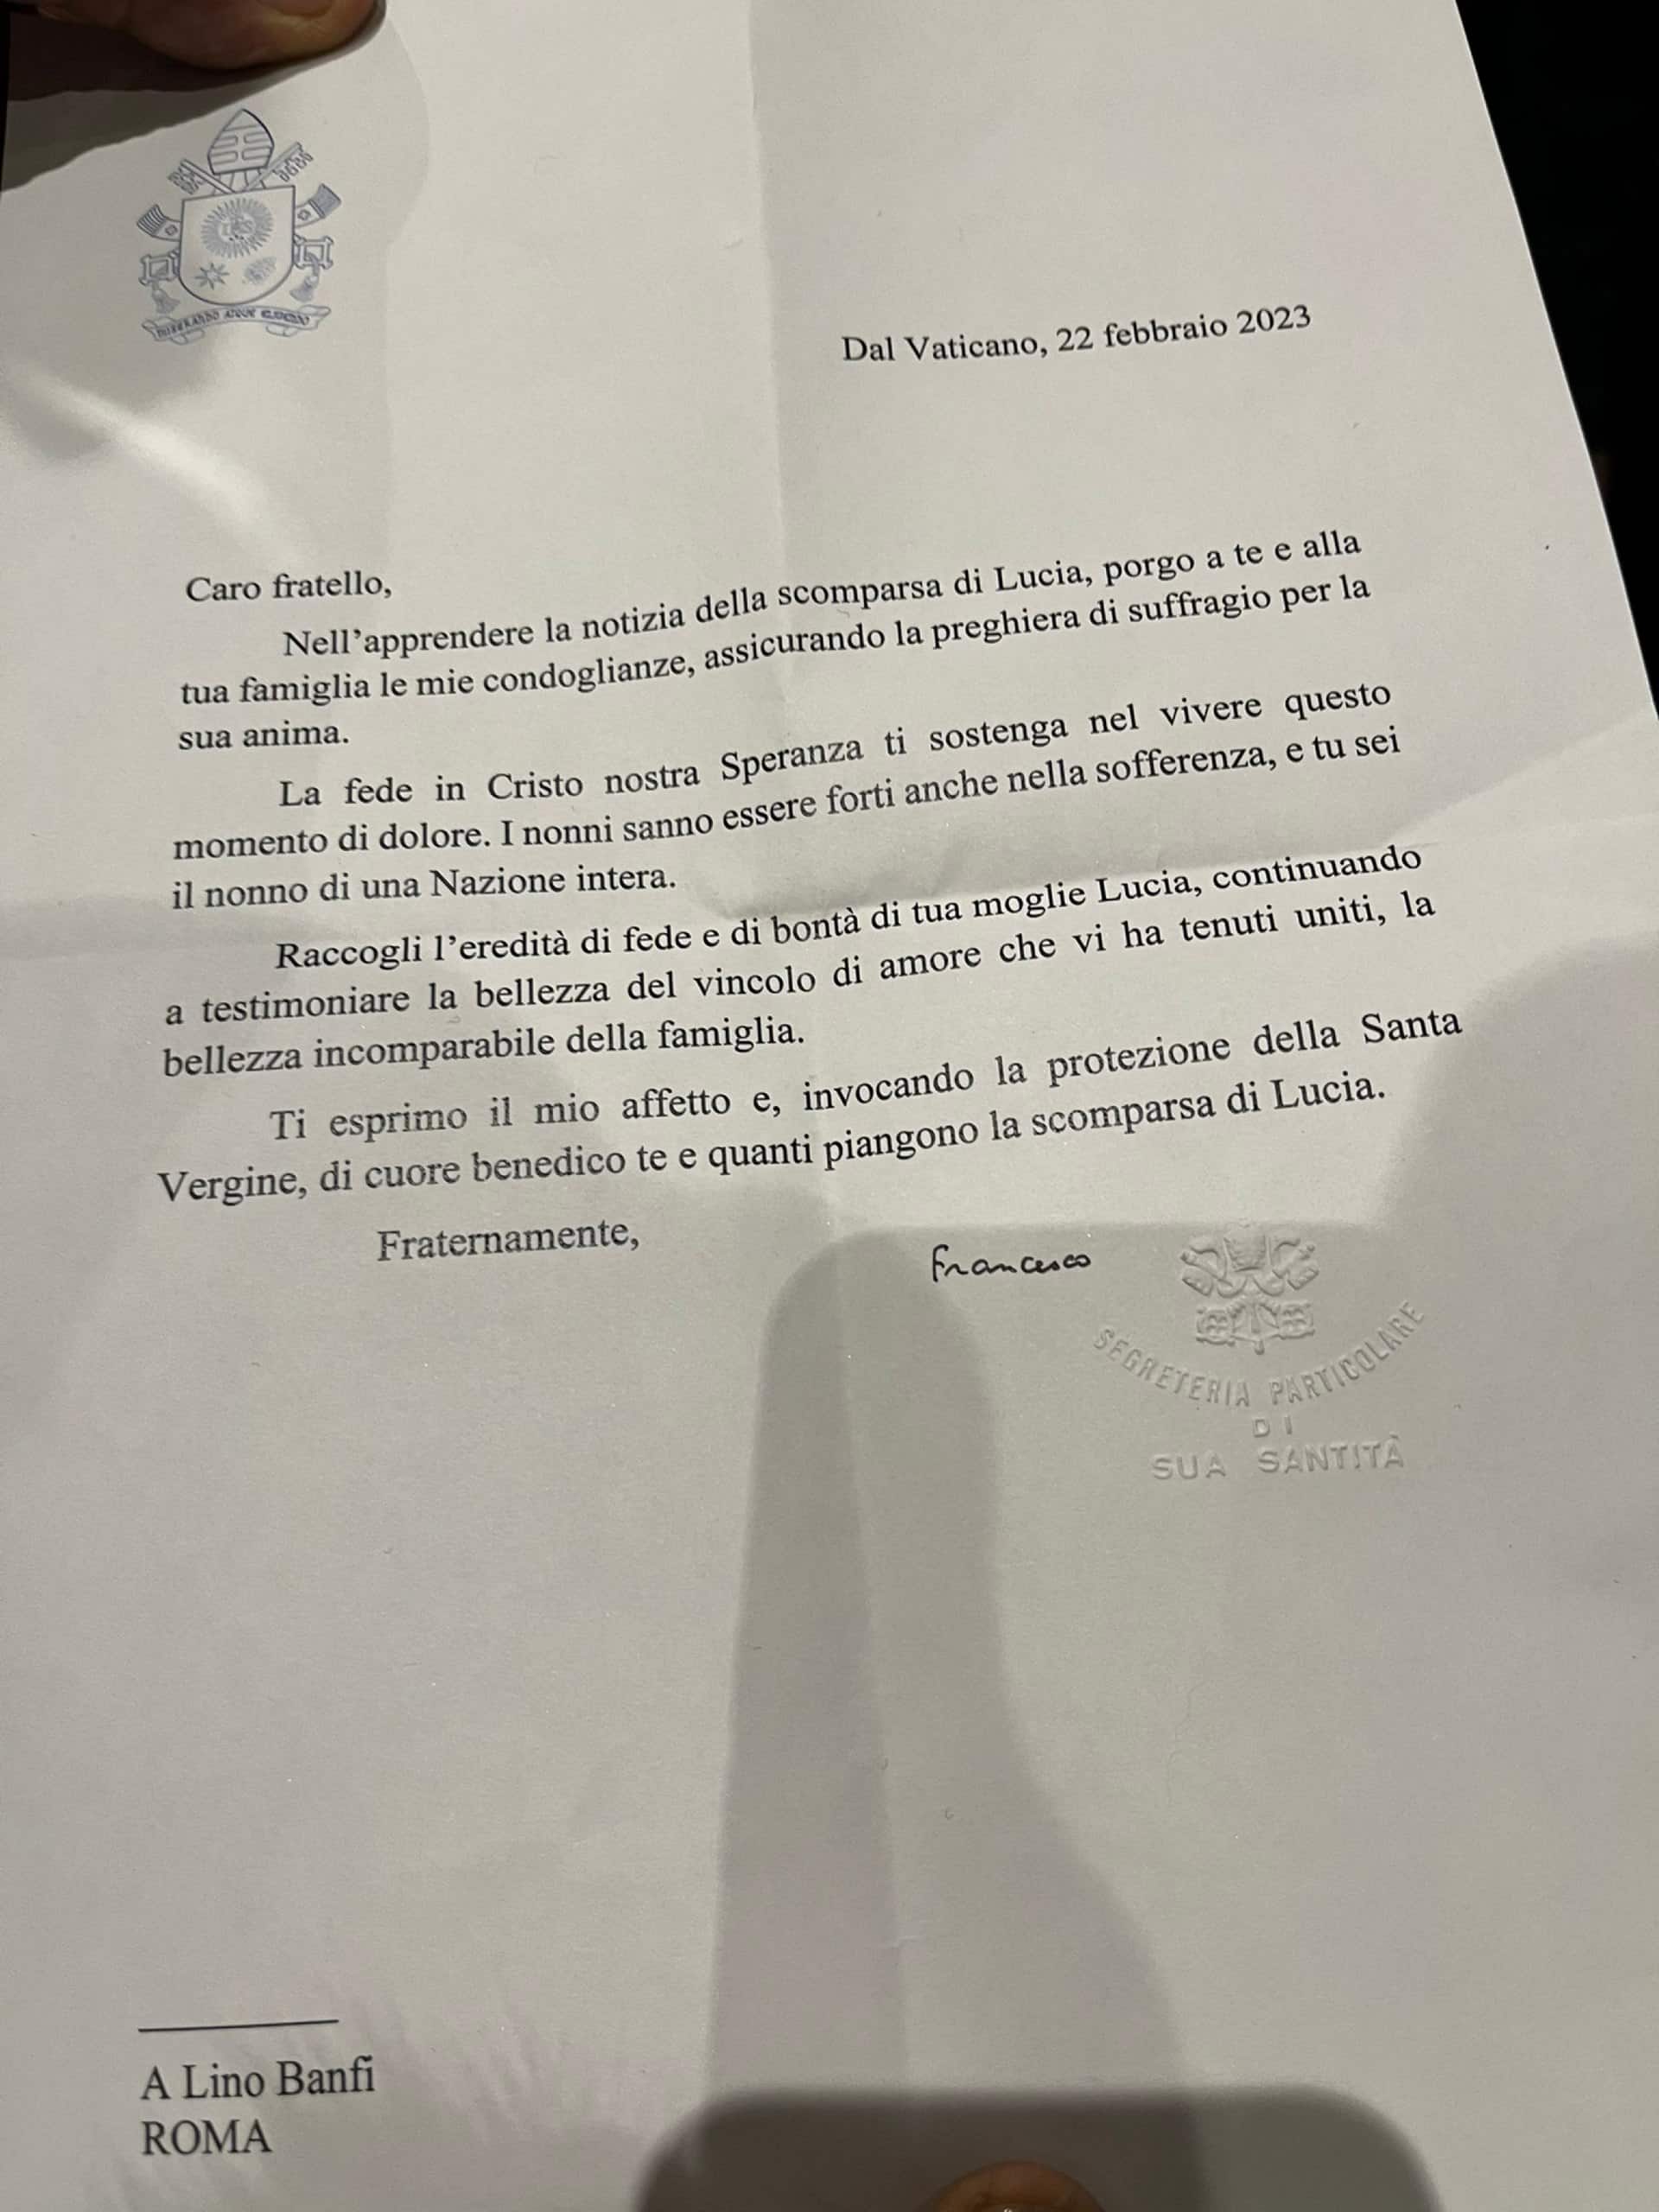 La lettera di Papa Francesco